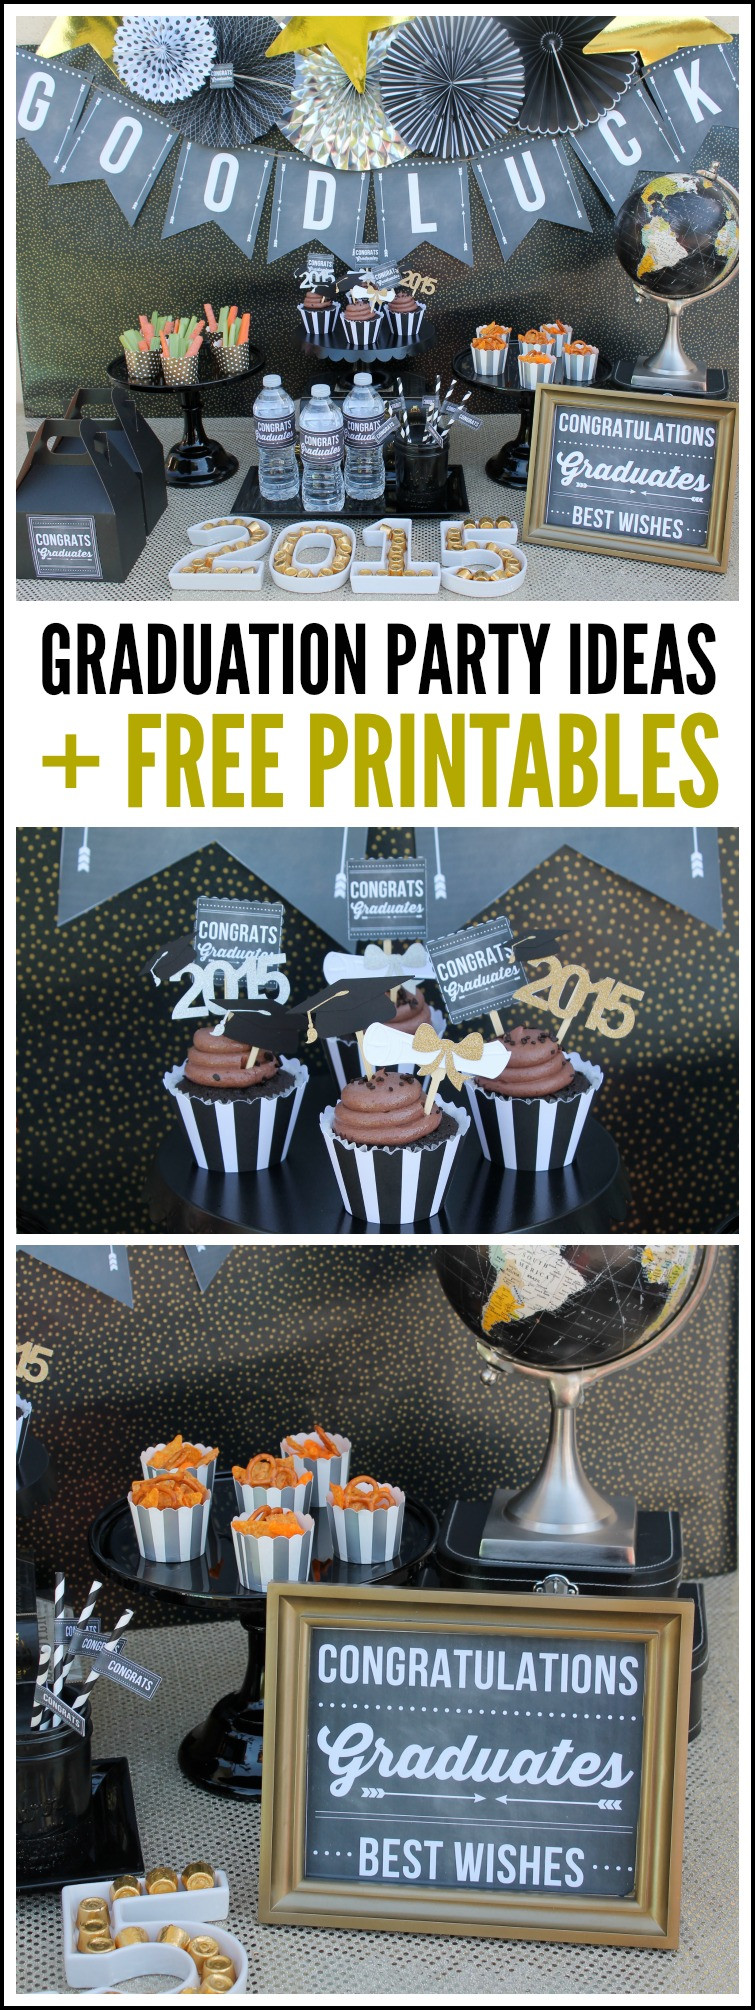 Ideas For College Graduation Party Favors
 Graduation Party Ideas Free Printables